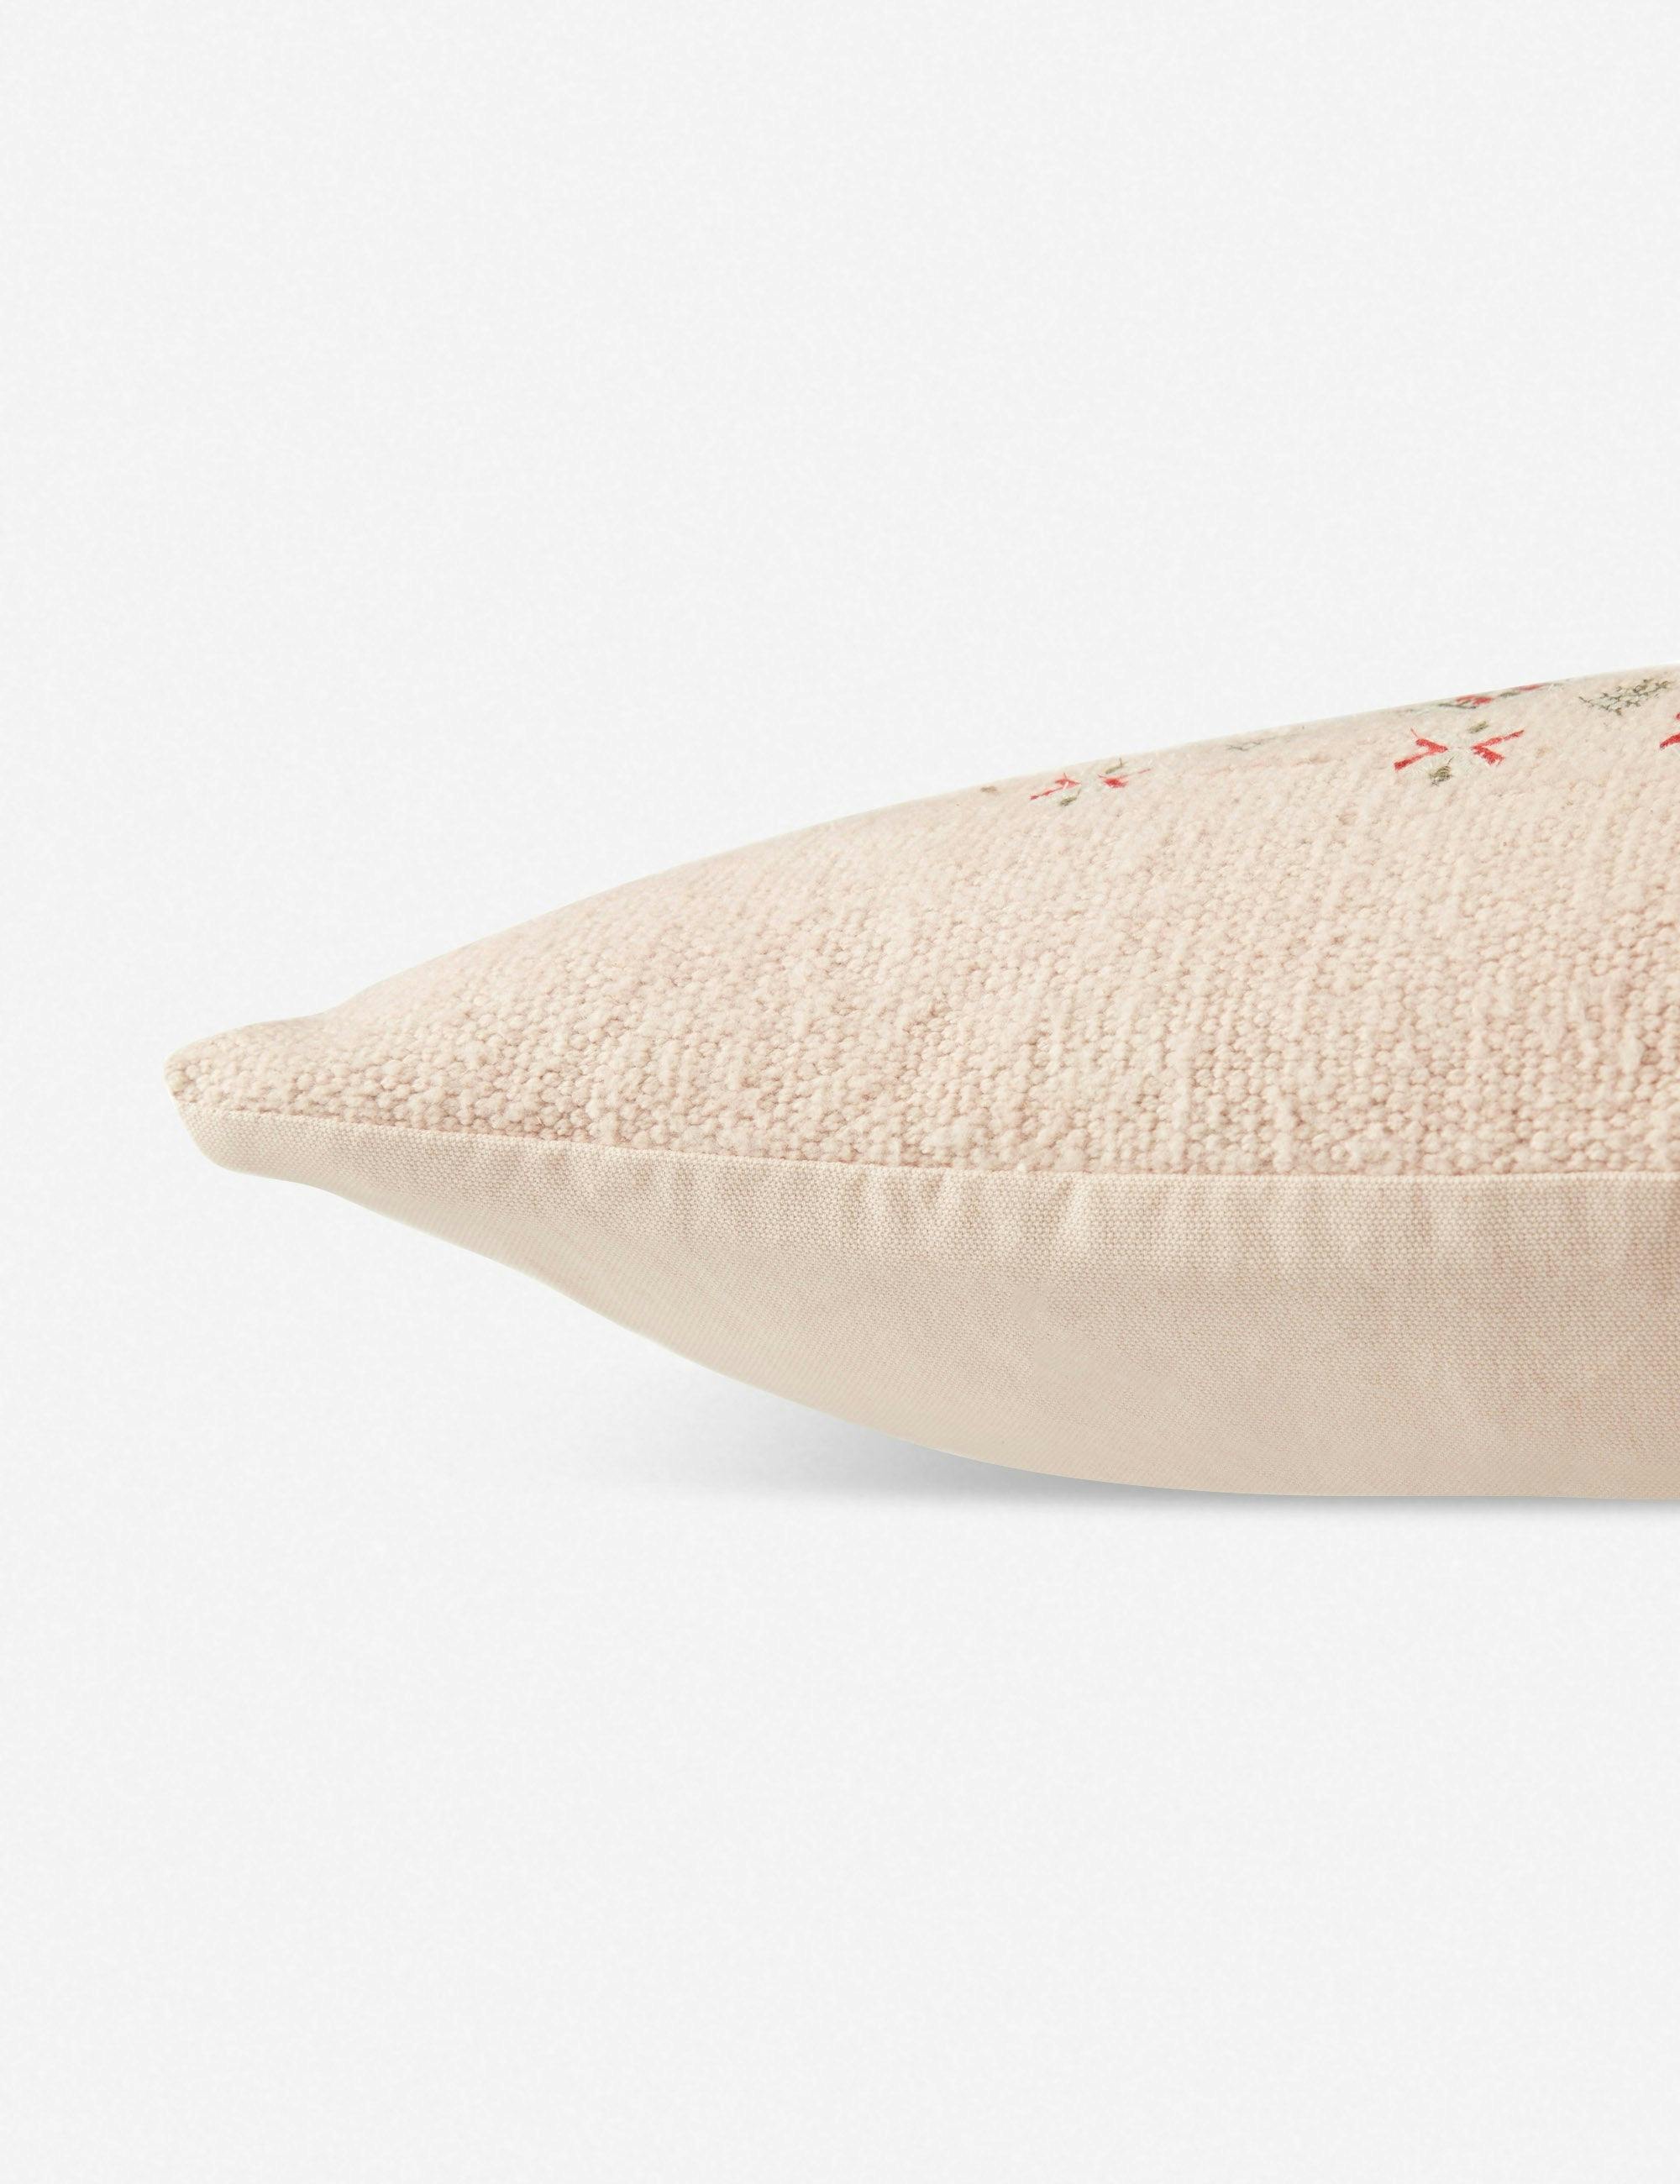 Arabesque Blush & Brown Embroidered Cotton Round Pillow Set